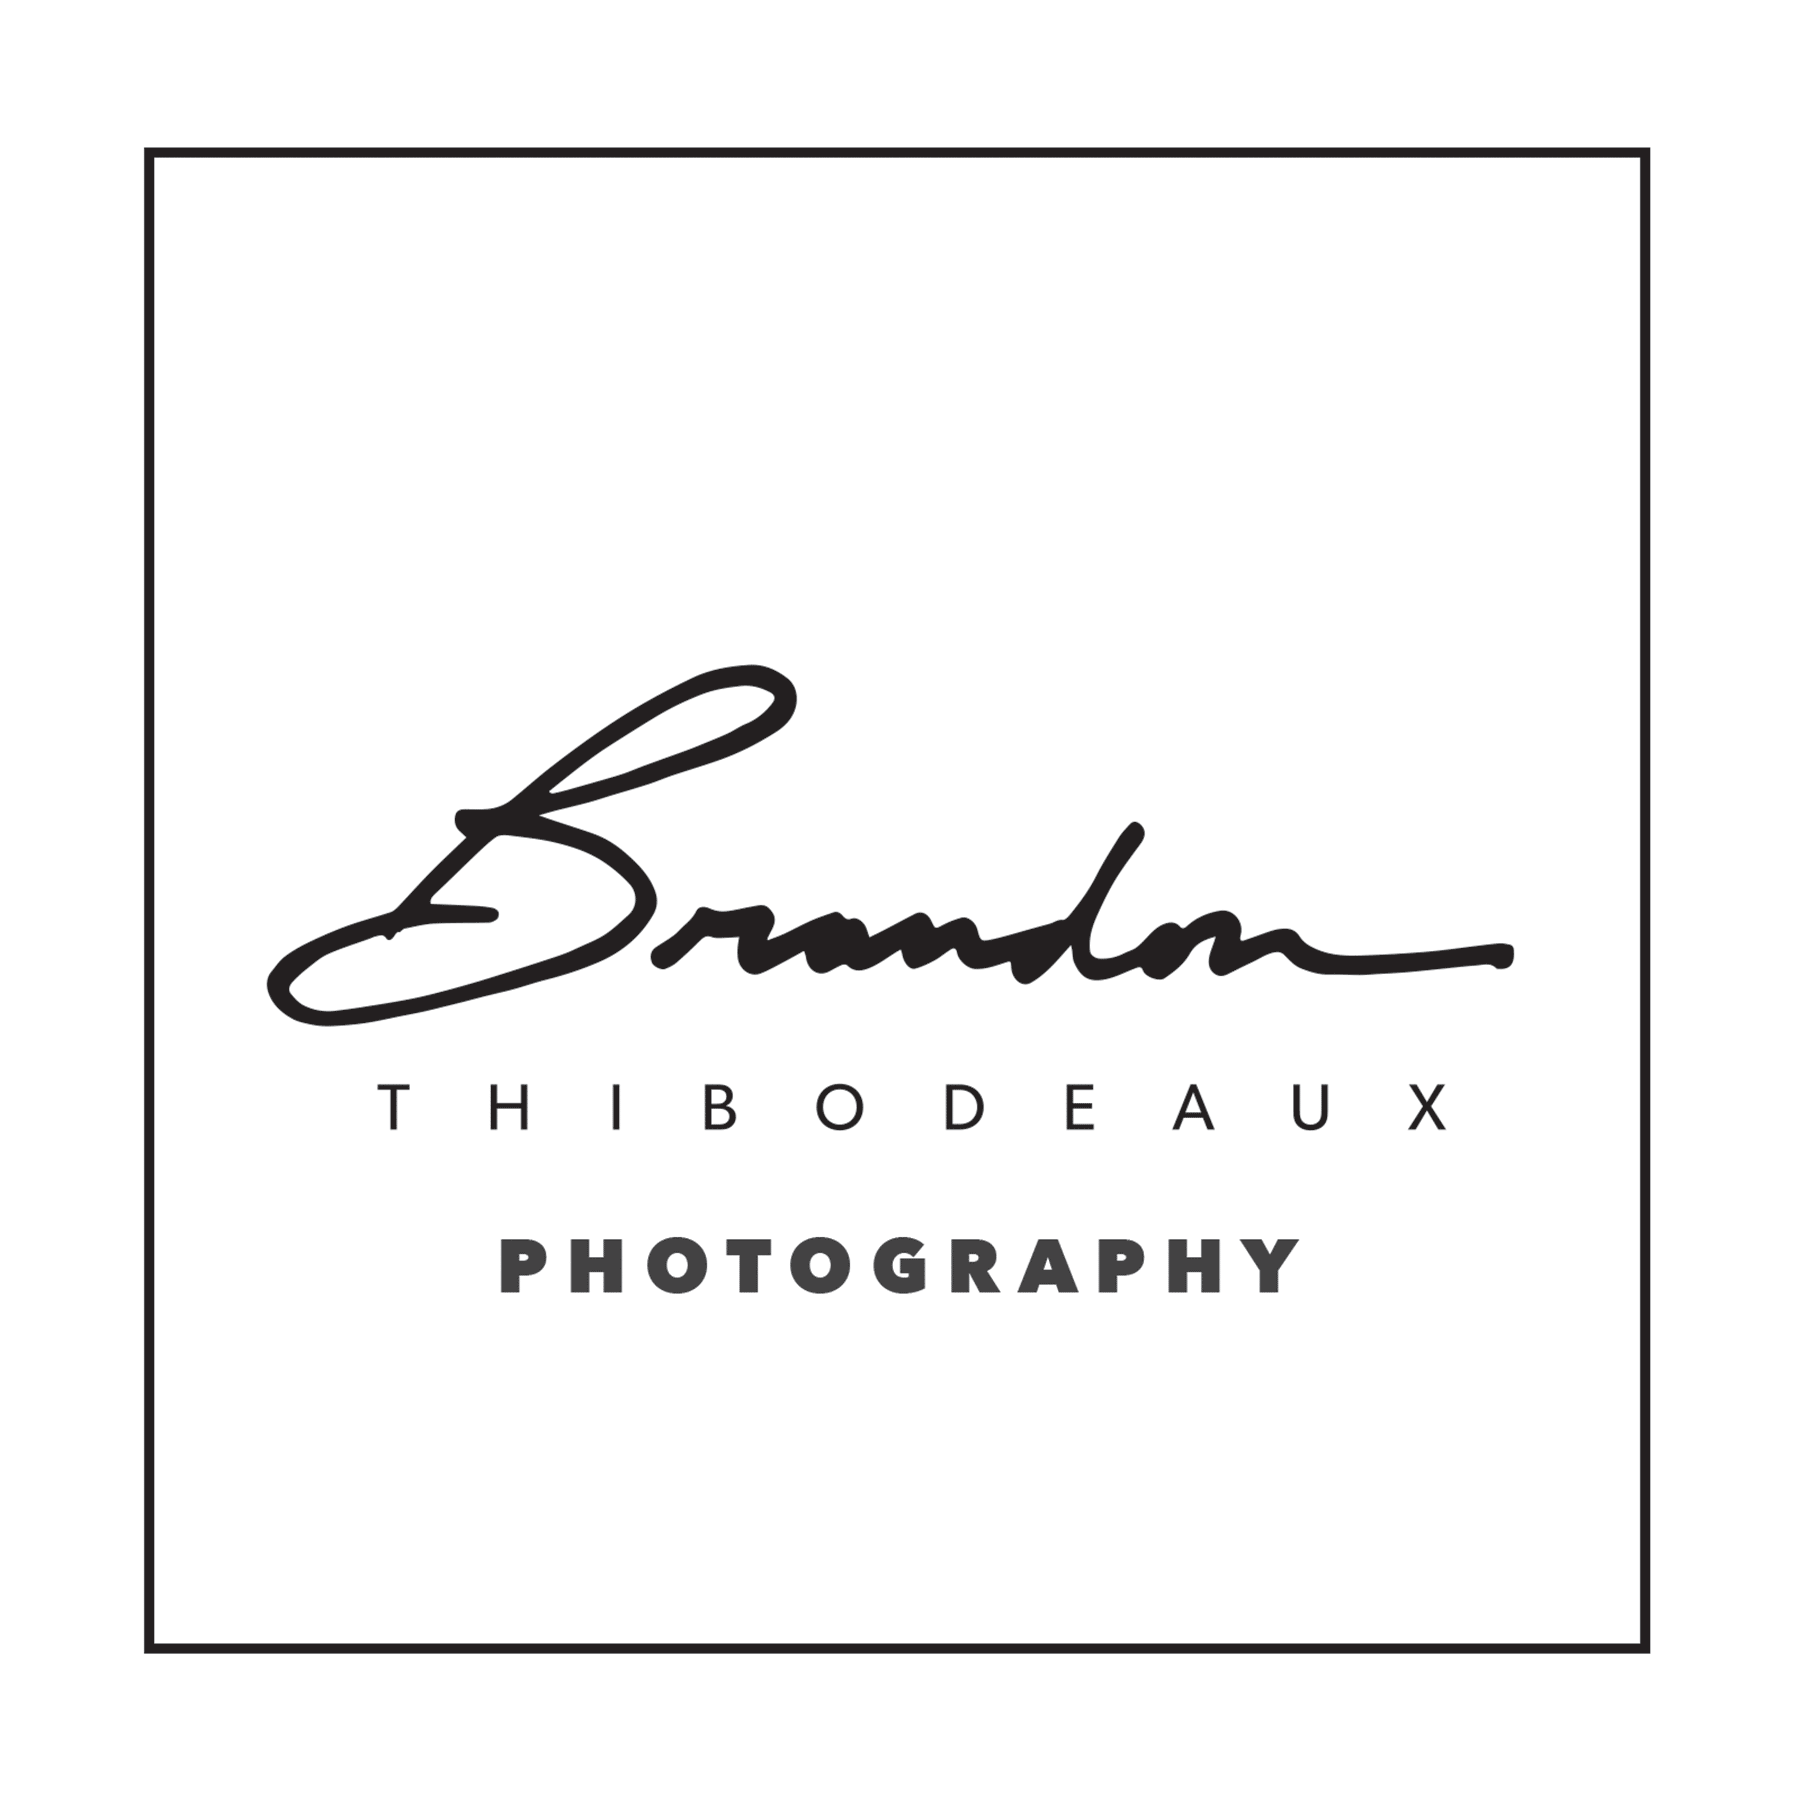 Brandon Thibodeaux Photography LLC